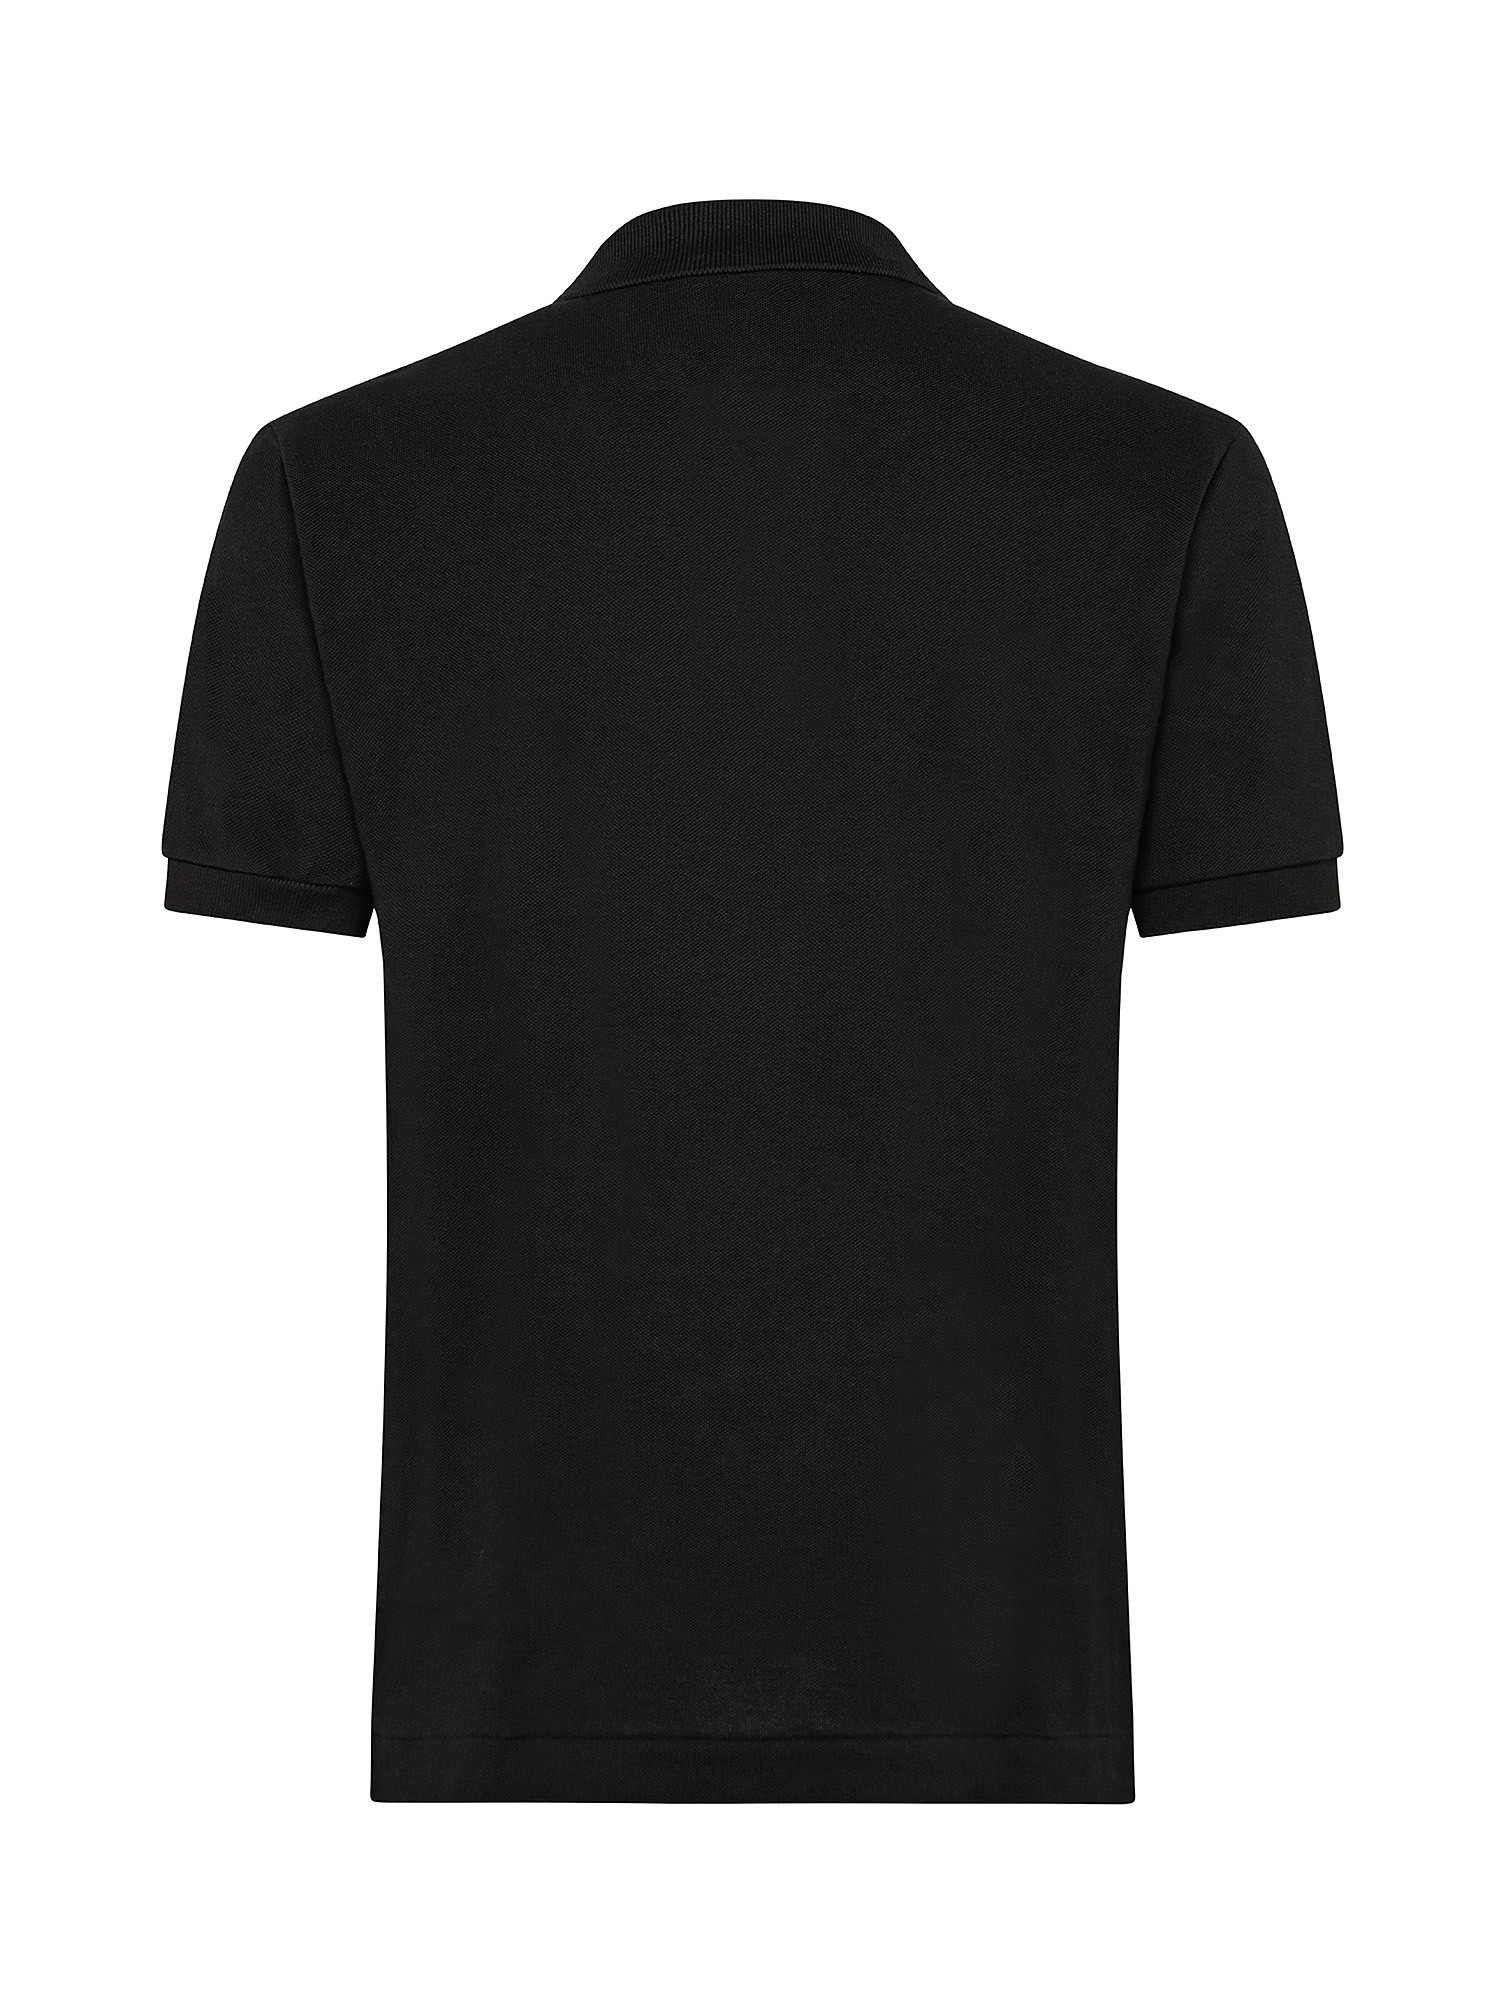 Polo shirt, Black, large image number 1